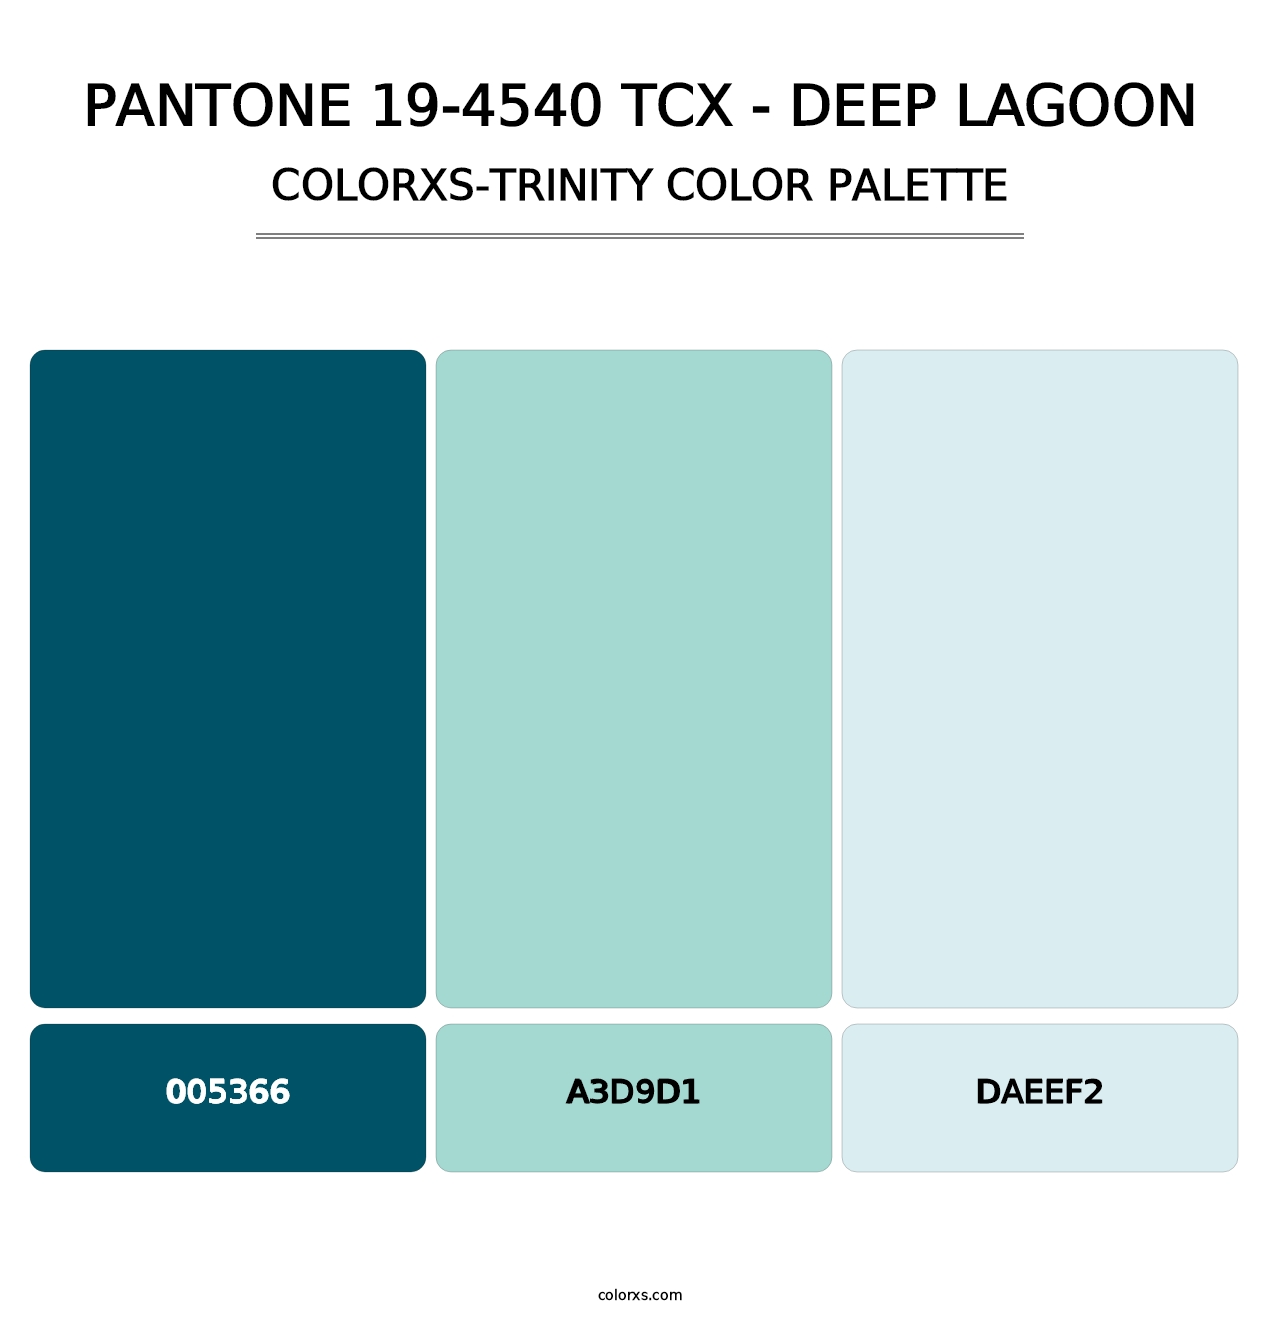 PANTONE 19-4540 TCX - Deep Lagoon - Colorxs Trinity Palette